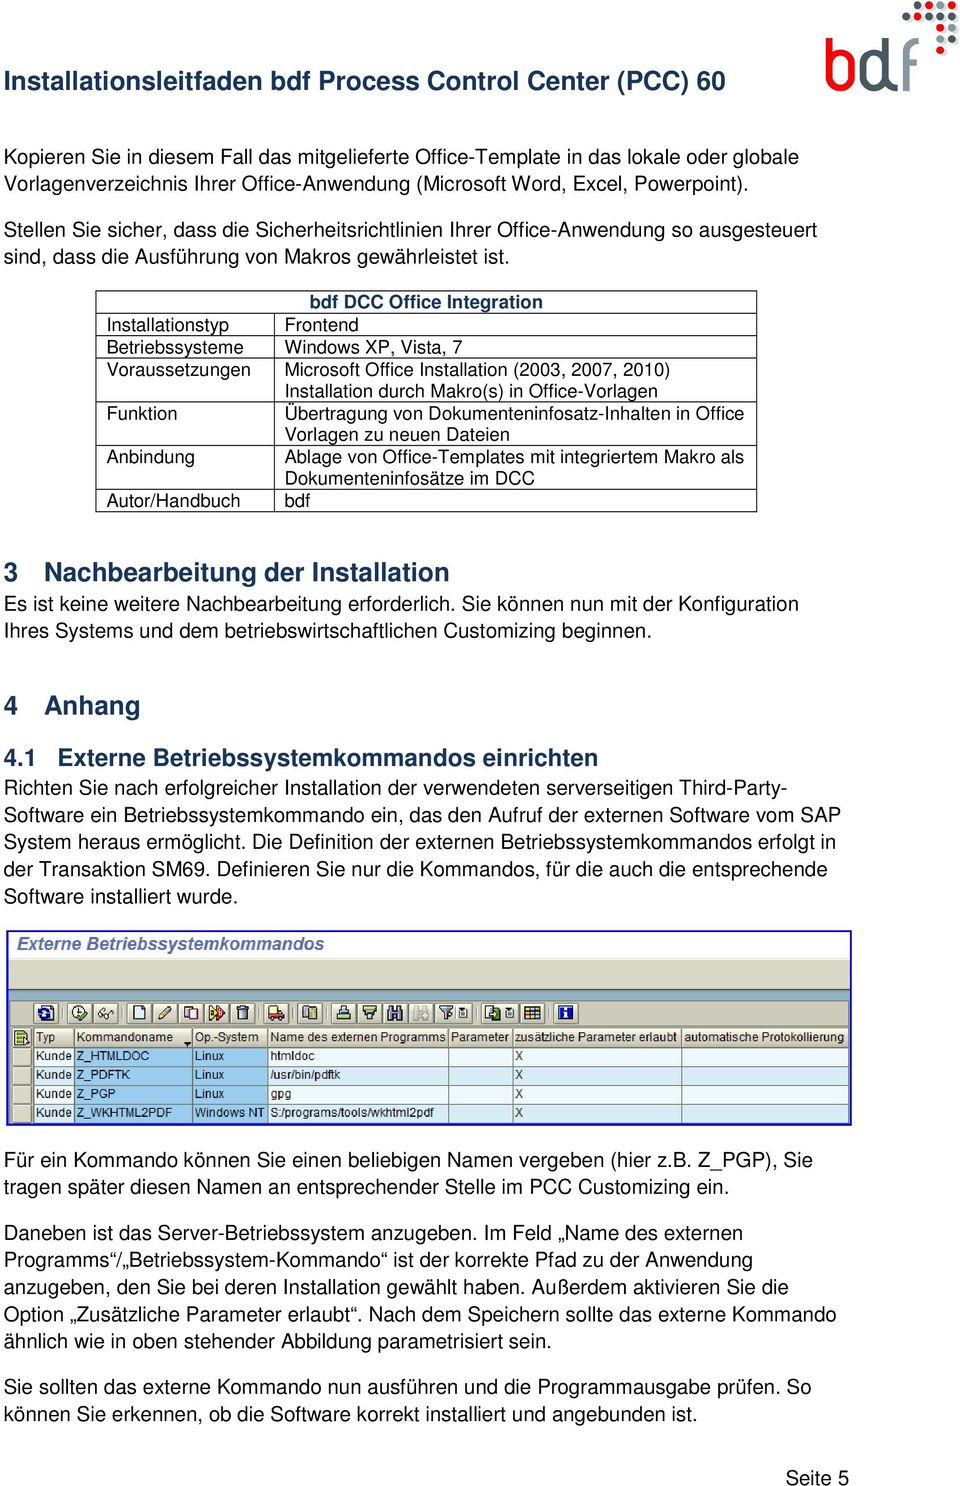 bdf DCC Office Integration Installationstyp Frontend Betriebssysteme Windows XP, Vista, 7 Voraussetzungen Microsoft Office Installation (2003, 2007, 2010) Installation durch Makro(s) in